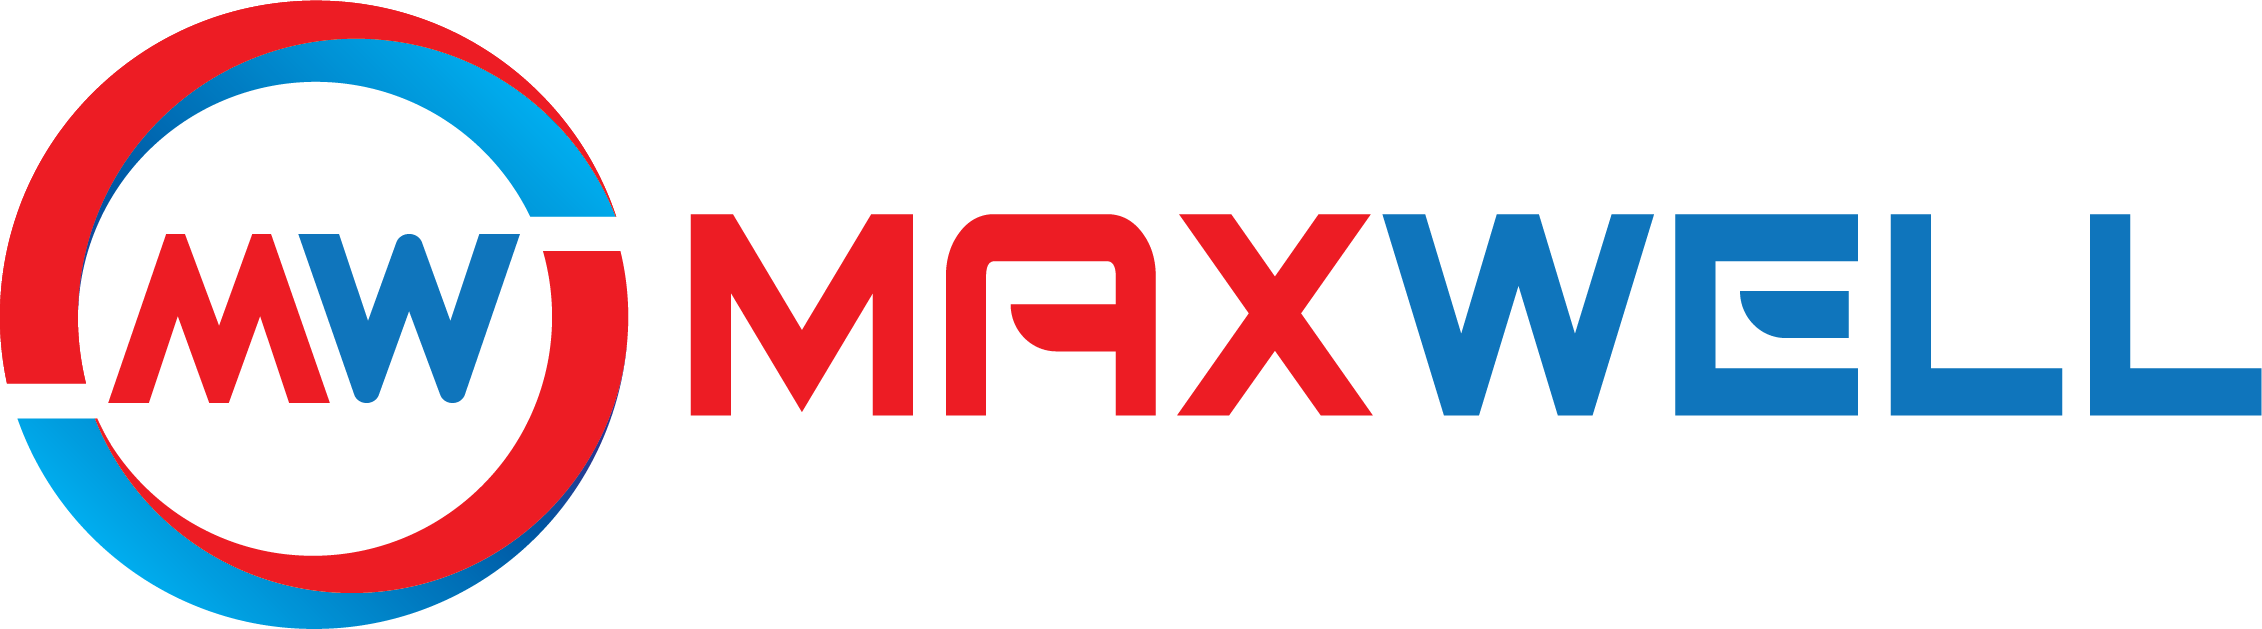 Maxwell Website